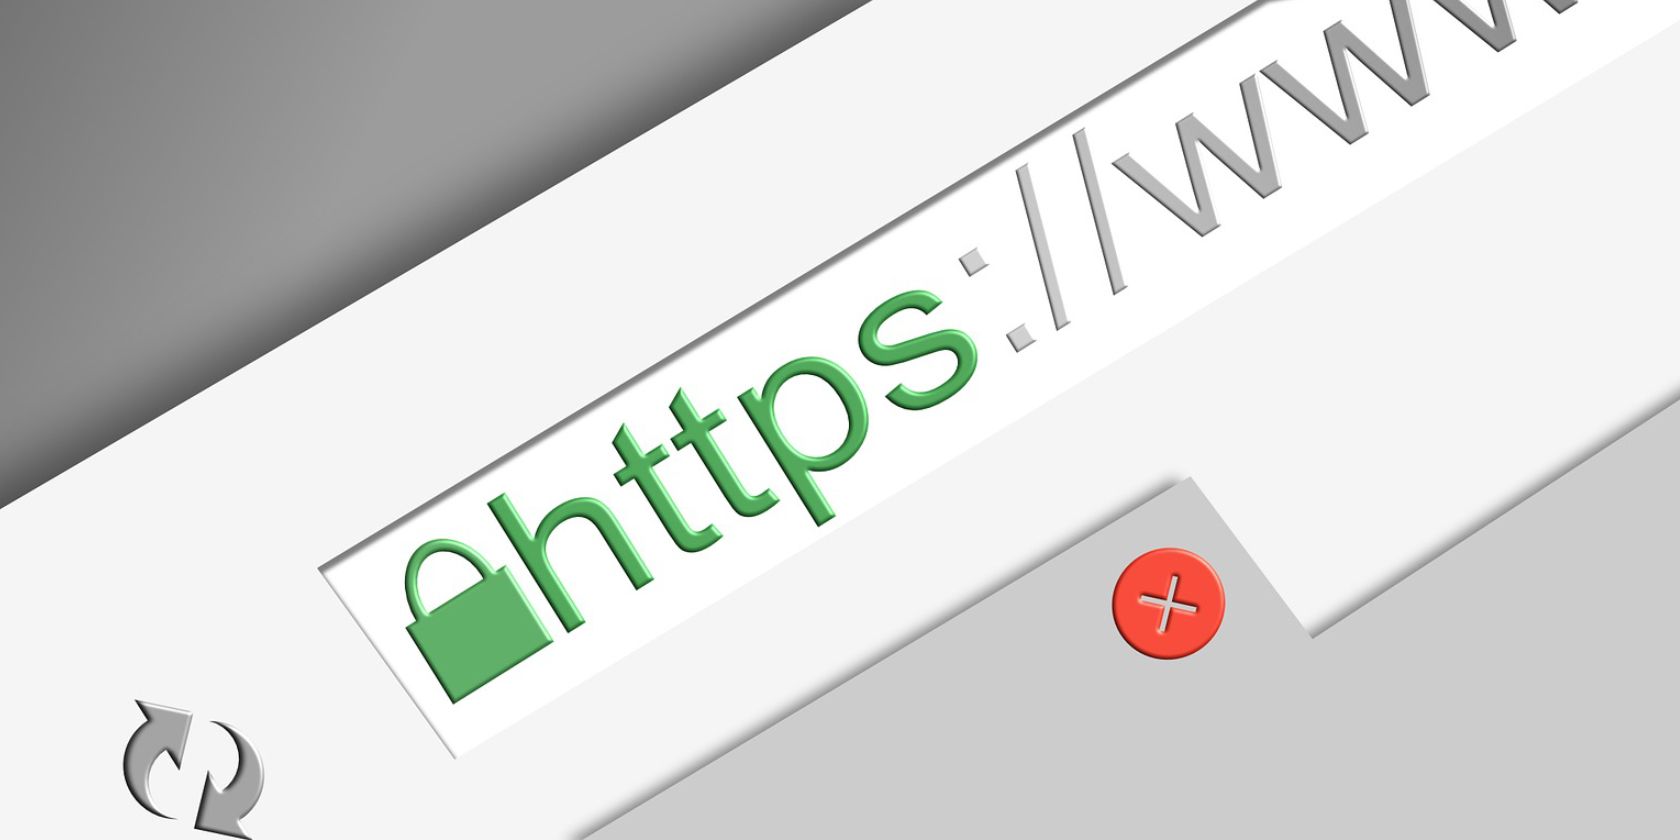 Close up image of a HTTPS web address